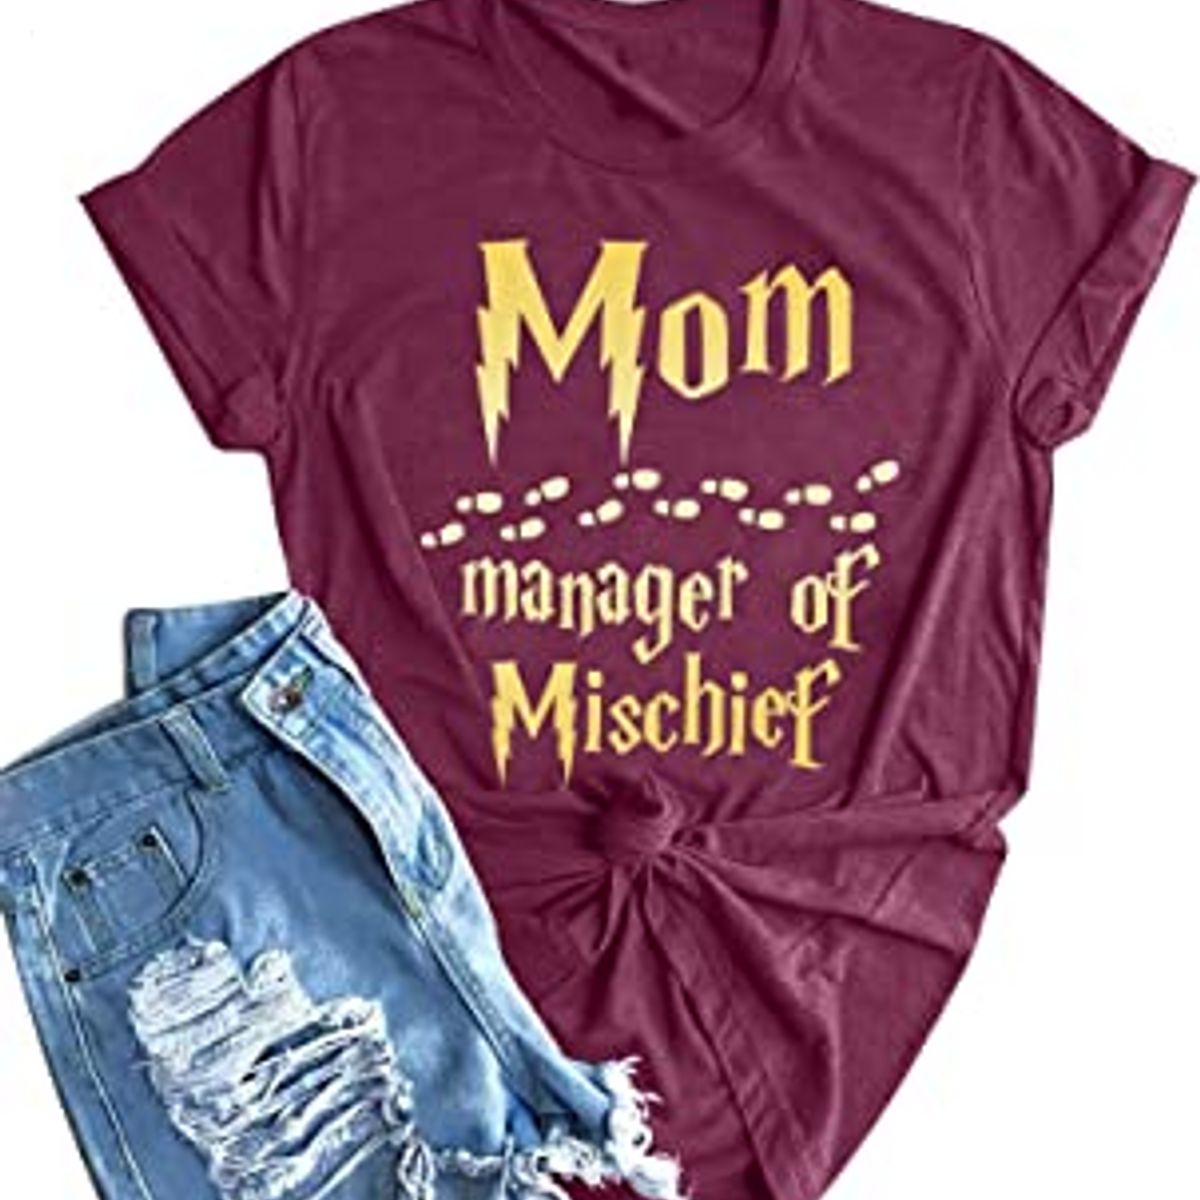 Women Funny Mom T Shirt Manager of Mischief Shirt Fantastic Mama Shirt Wizard Magic Mom Shirt Mothers Day Tee Tops